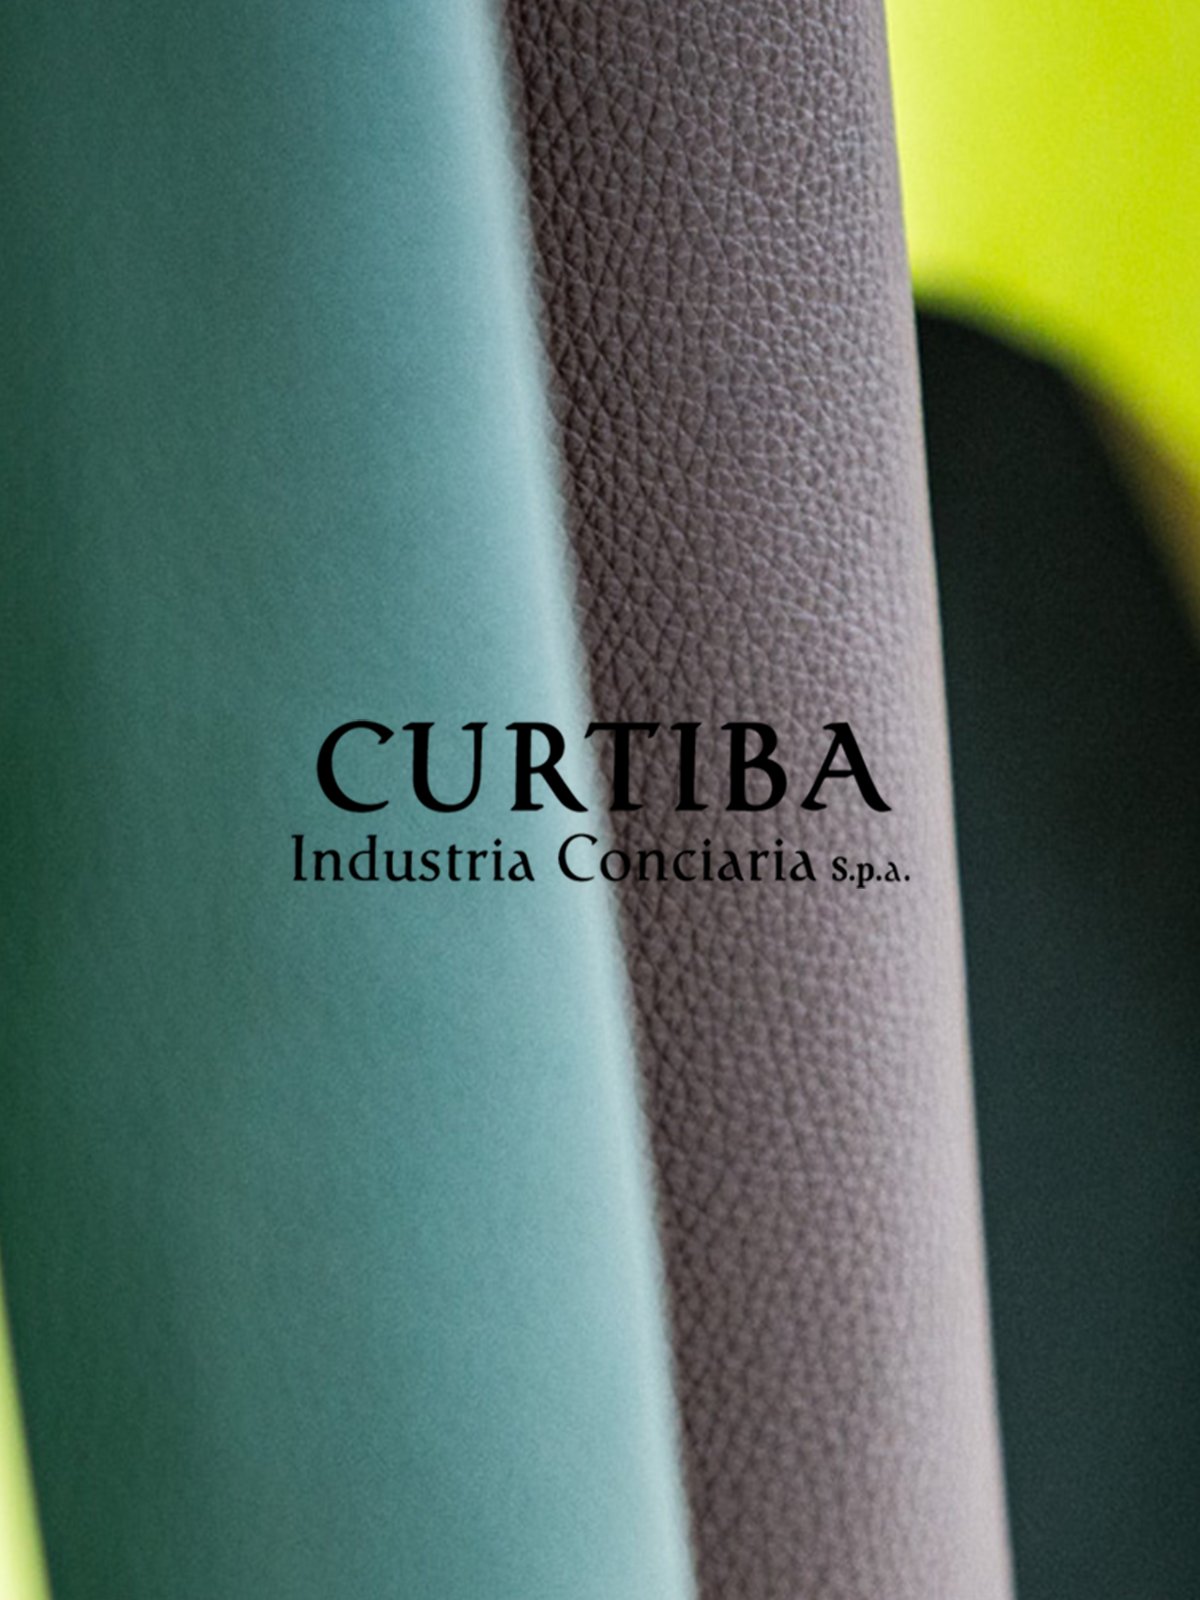 Leather&Luxury interviews Curtiba Industria Conciaria 